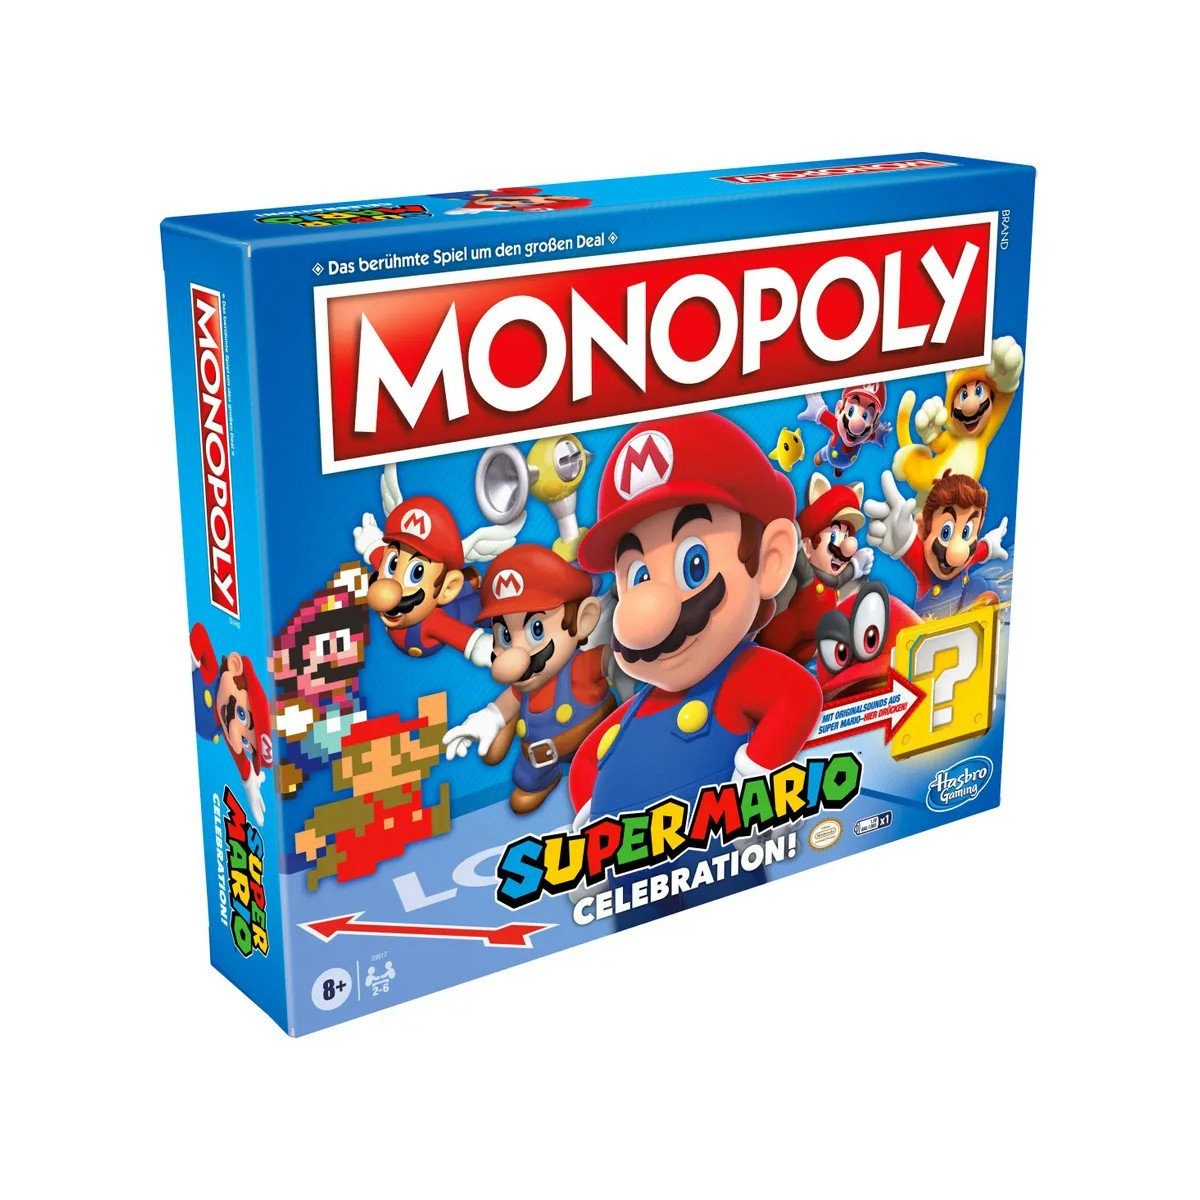 Super Brettspiel Monopoly Spiel, mit Sounds Hasbro Celebration, Mario original